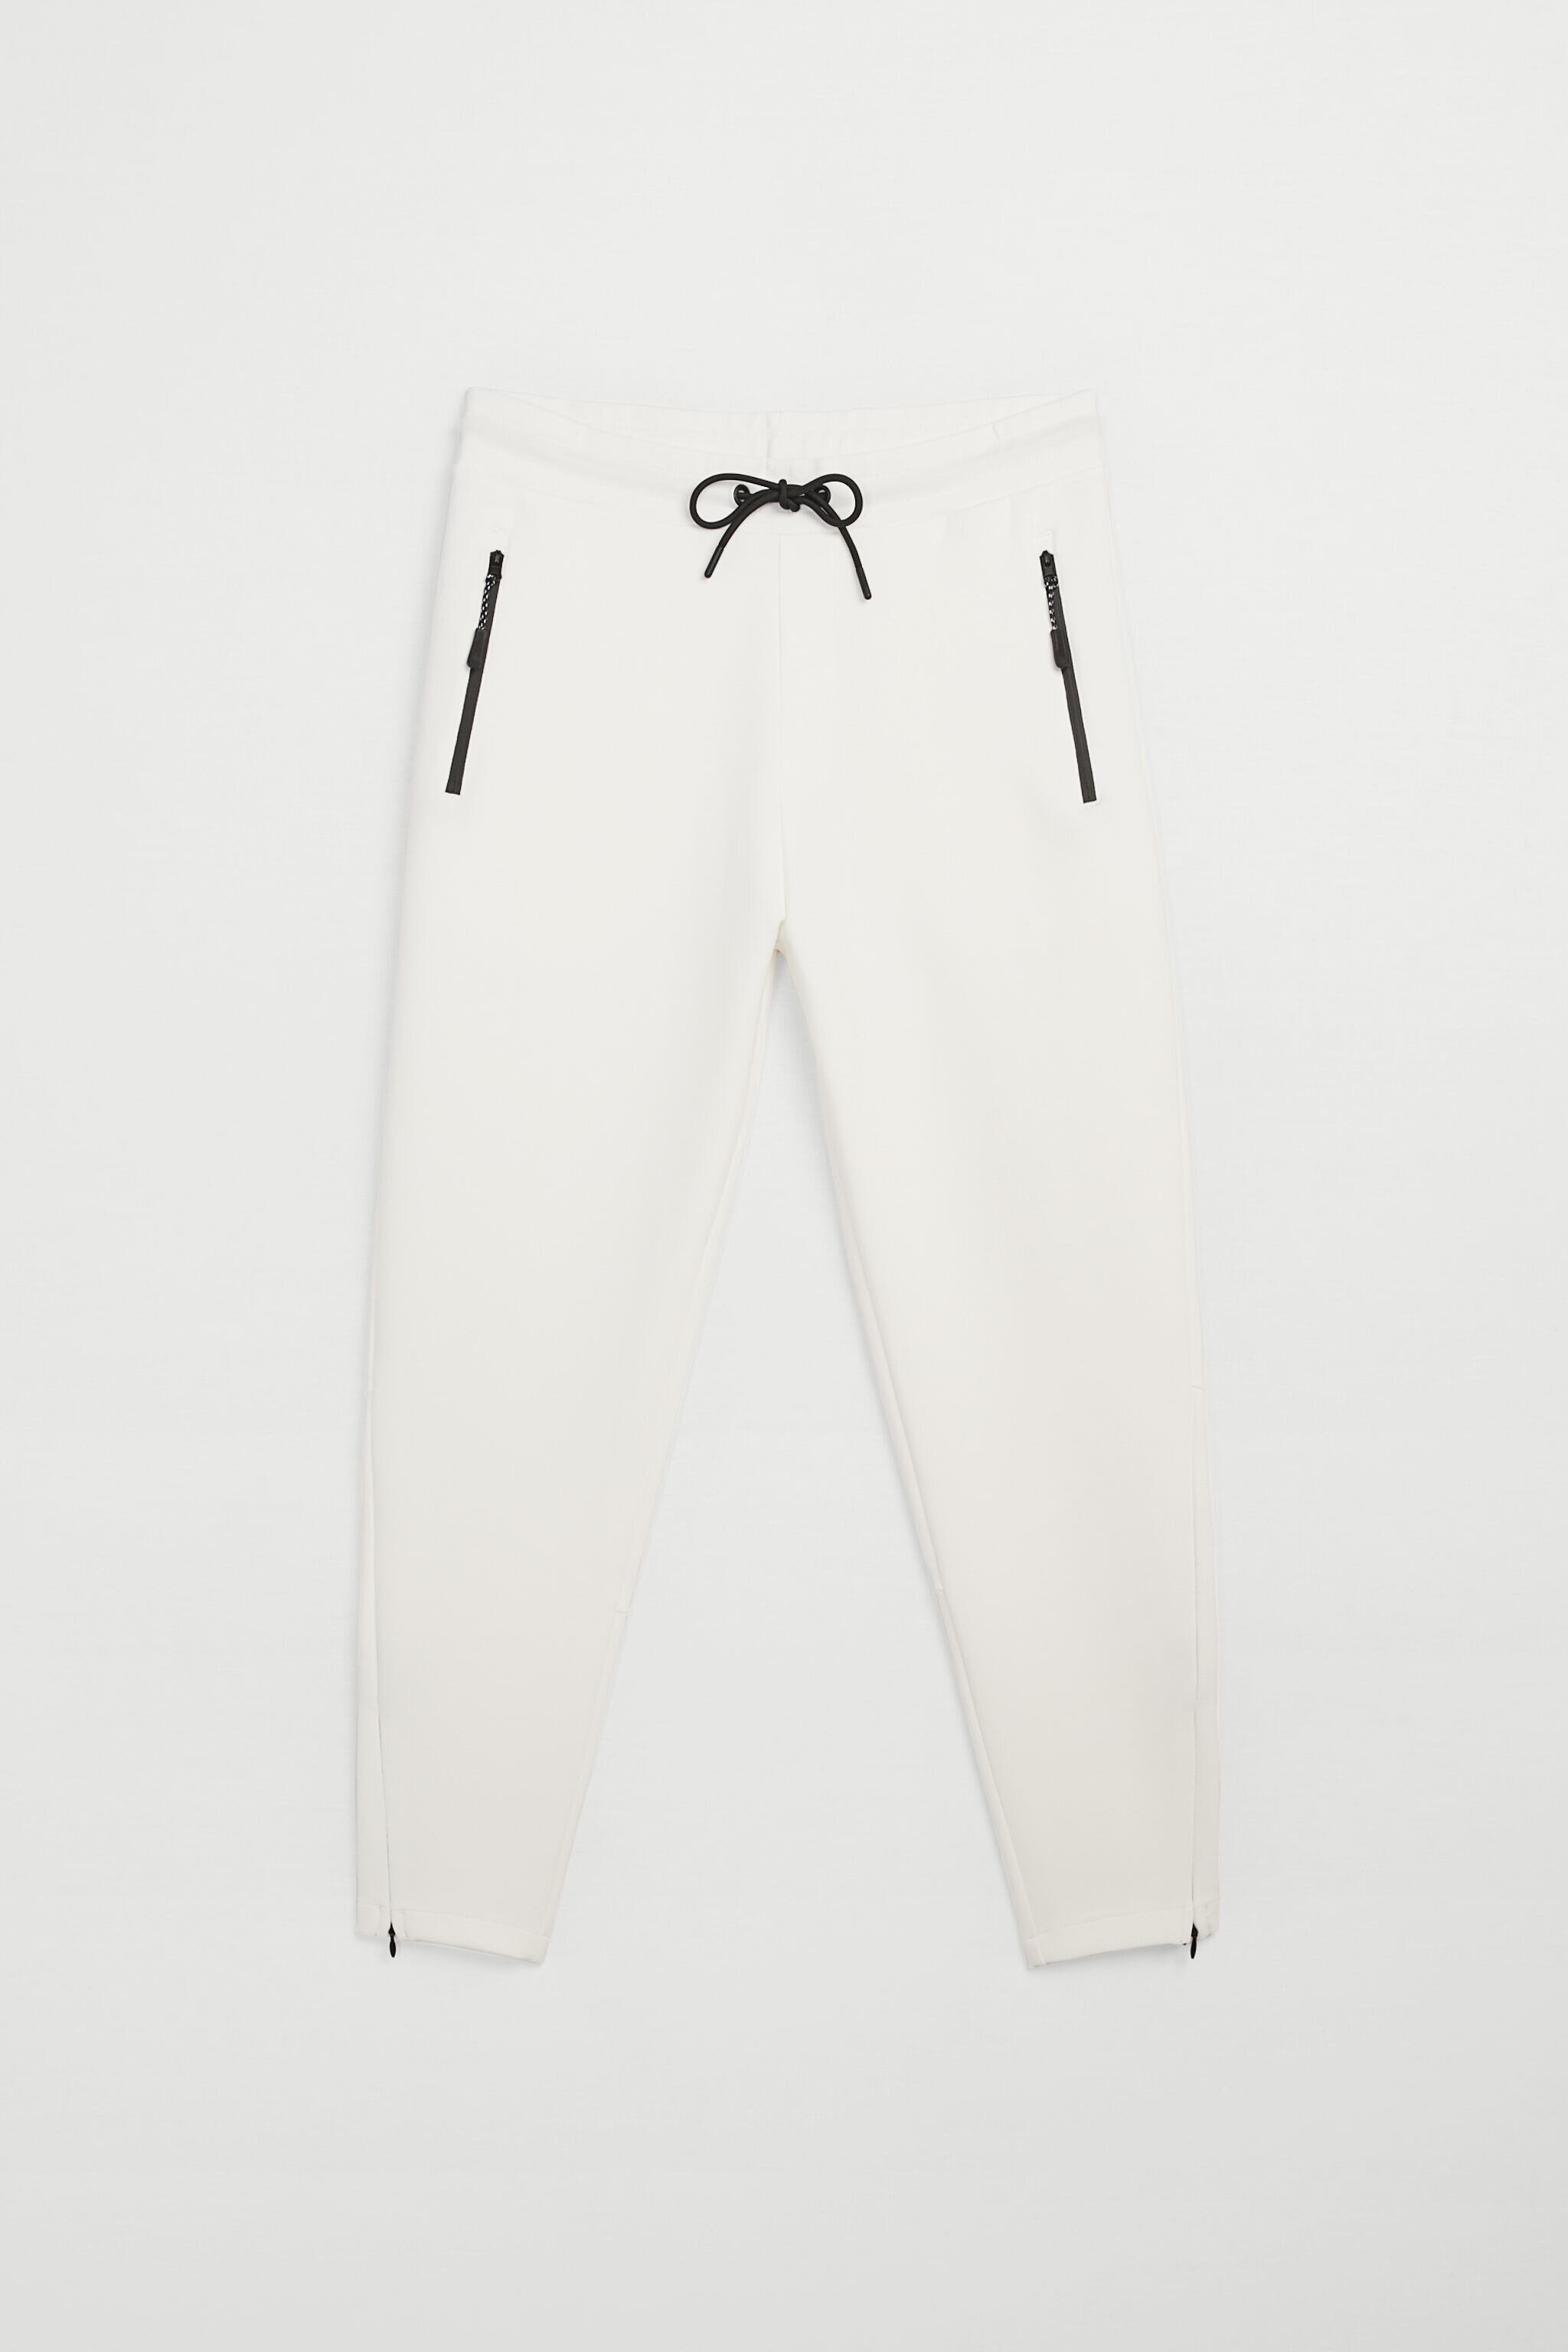 Zipped Jogging Trousers, ₱1,595